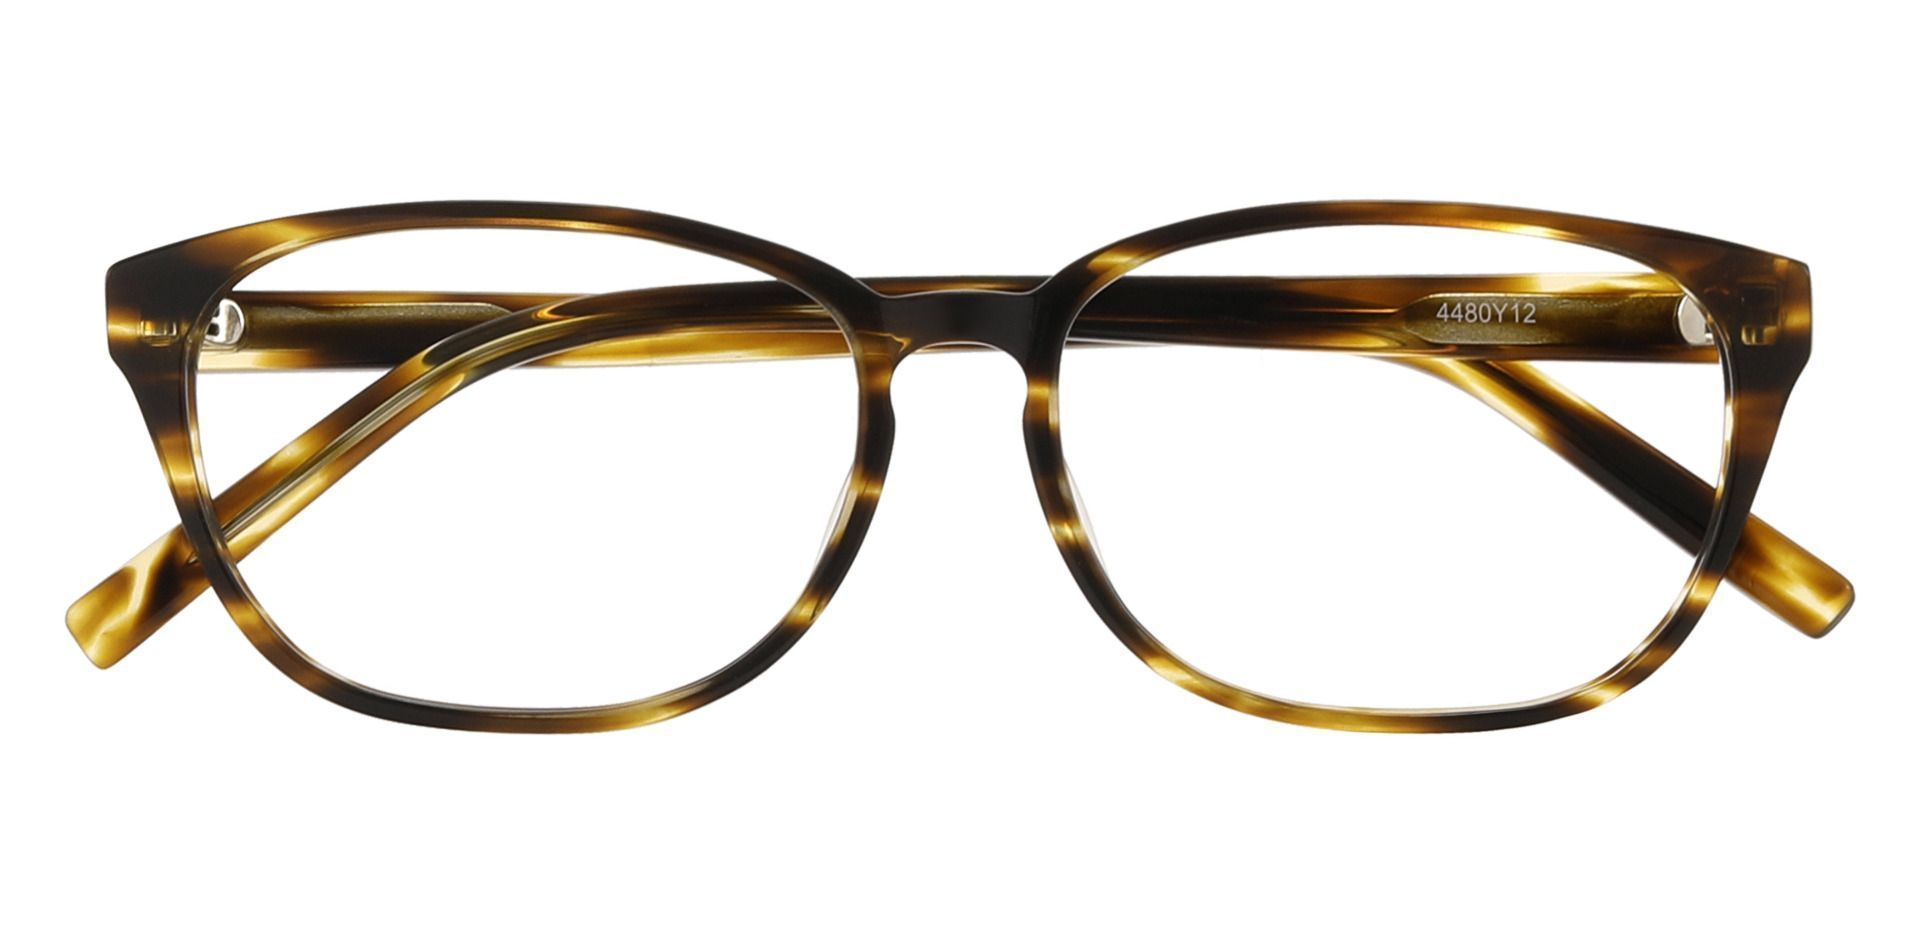 Marcia Oval Prescription Glasses - Tortoise